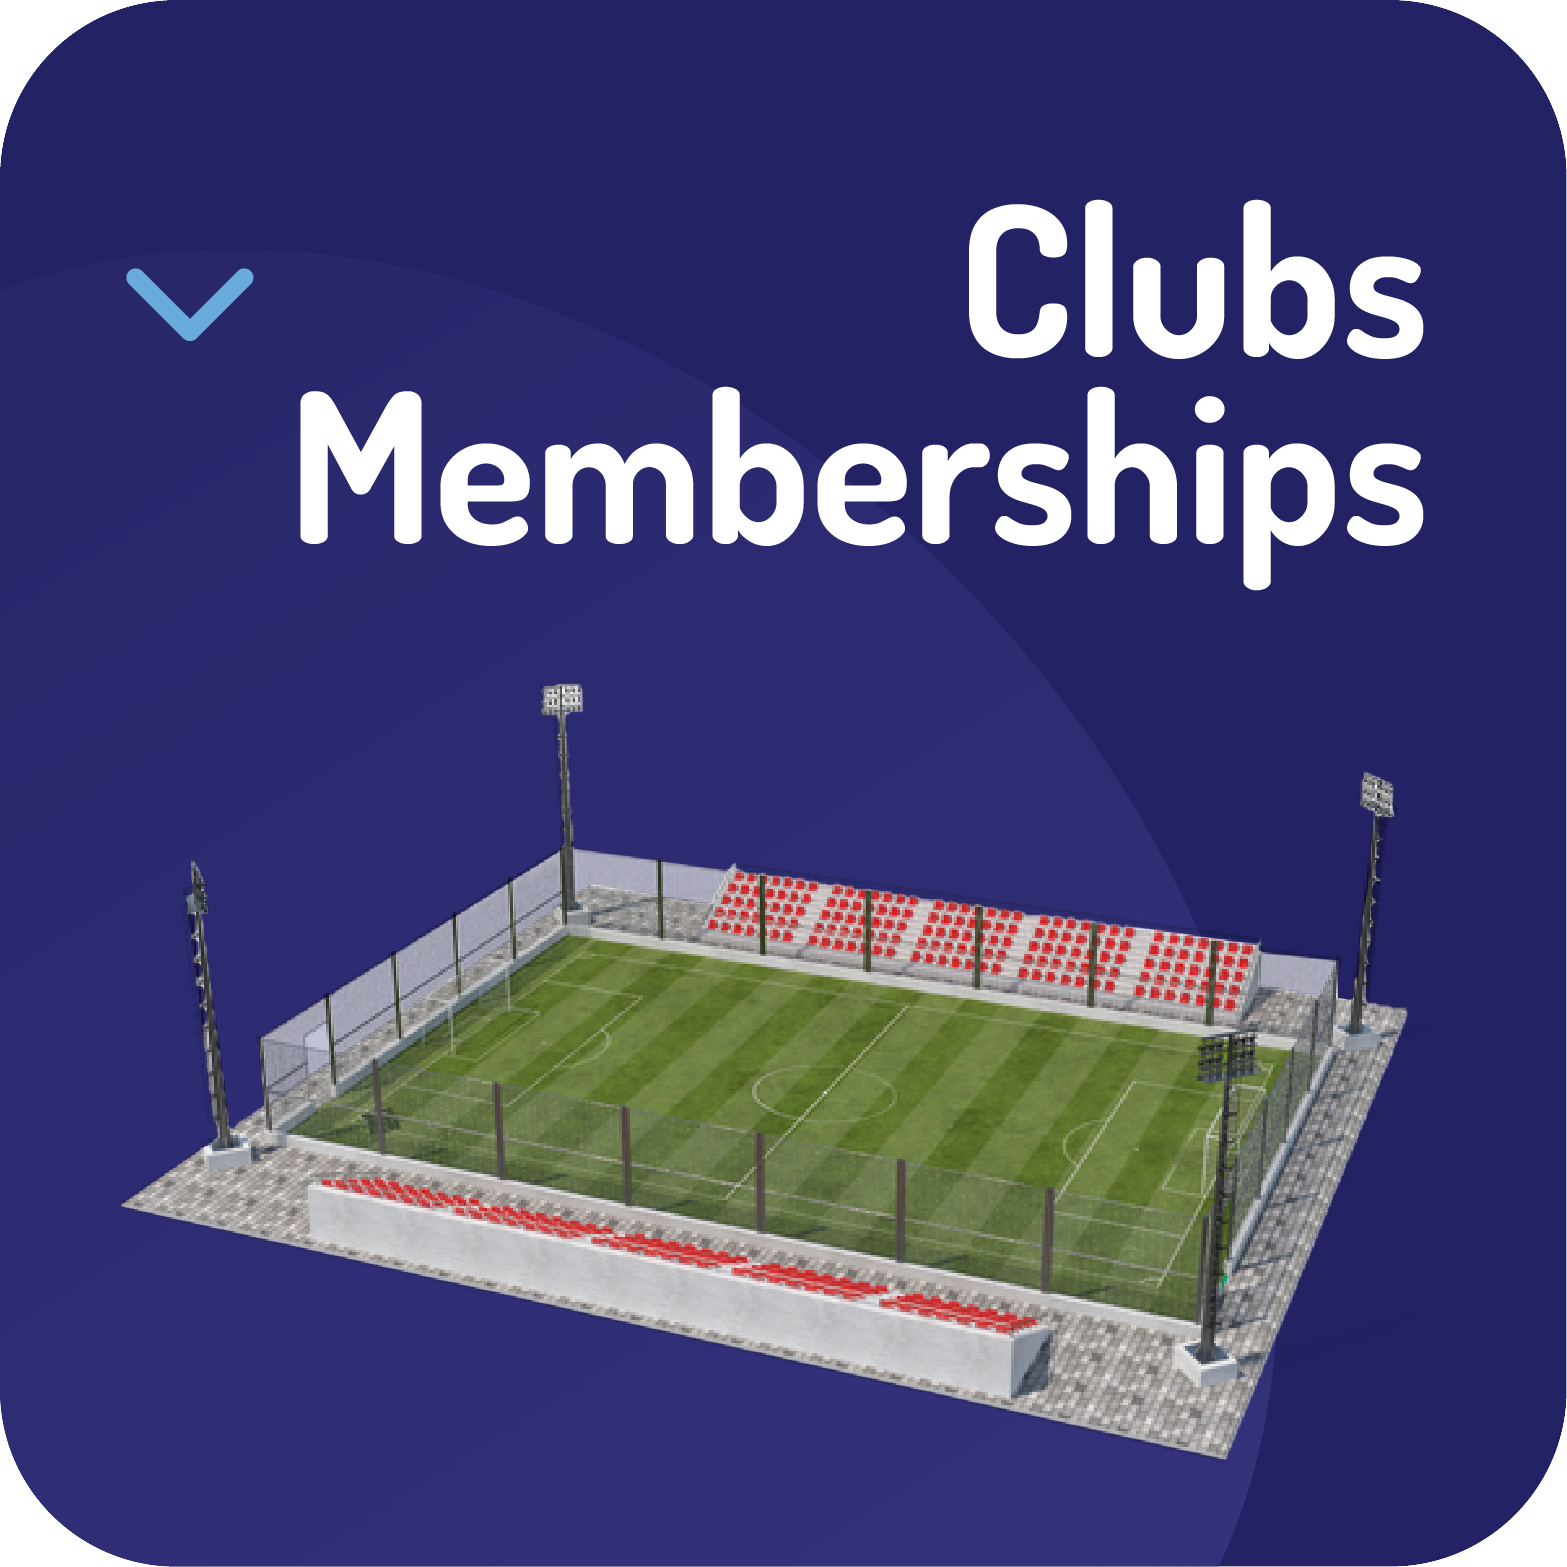 Clubs Memberships